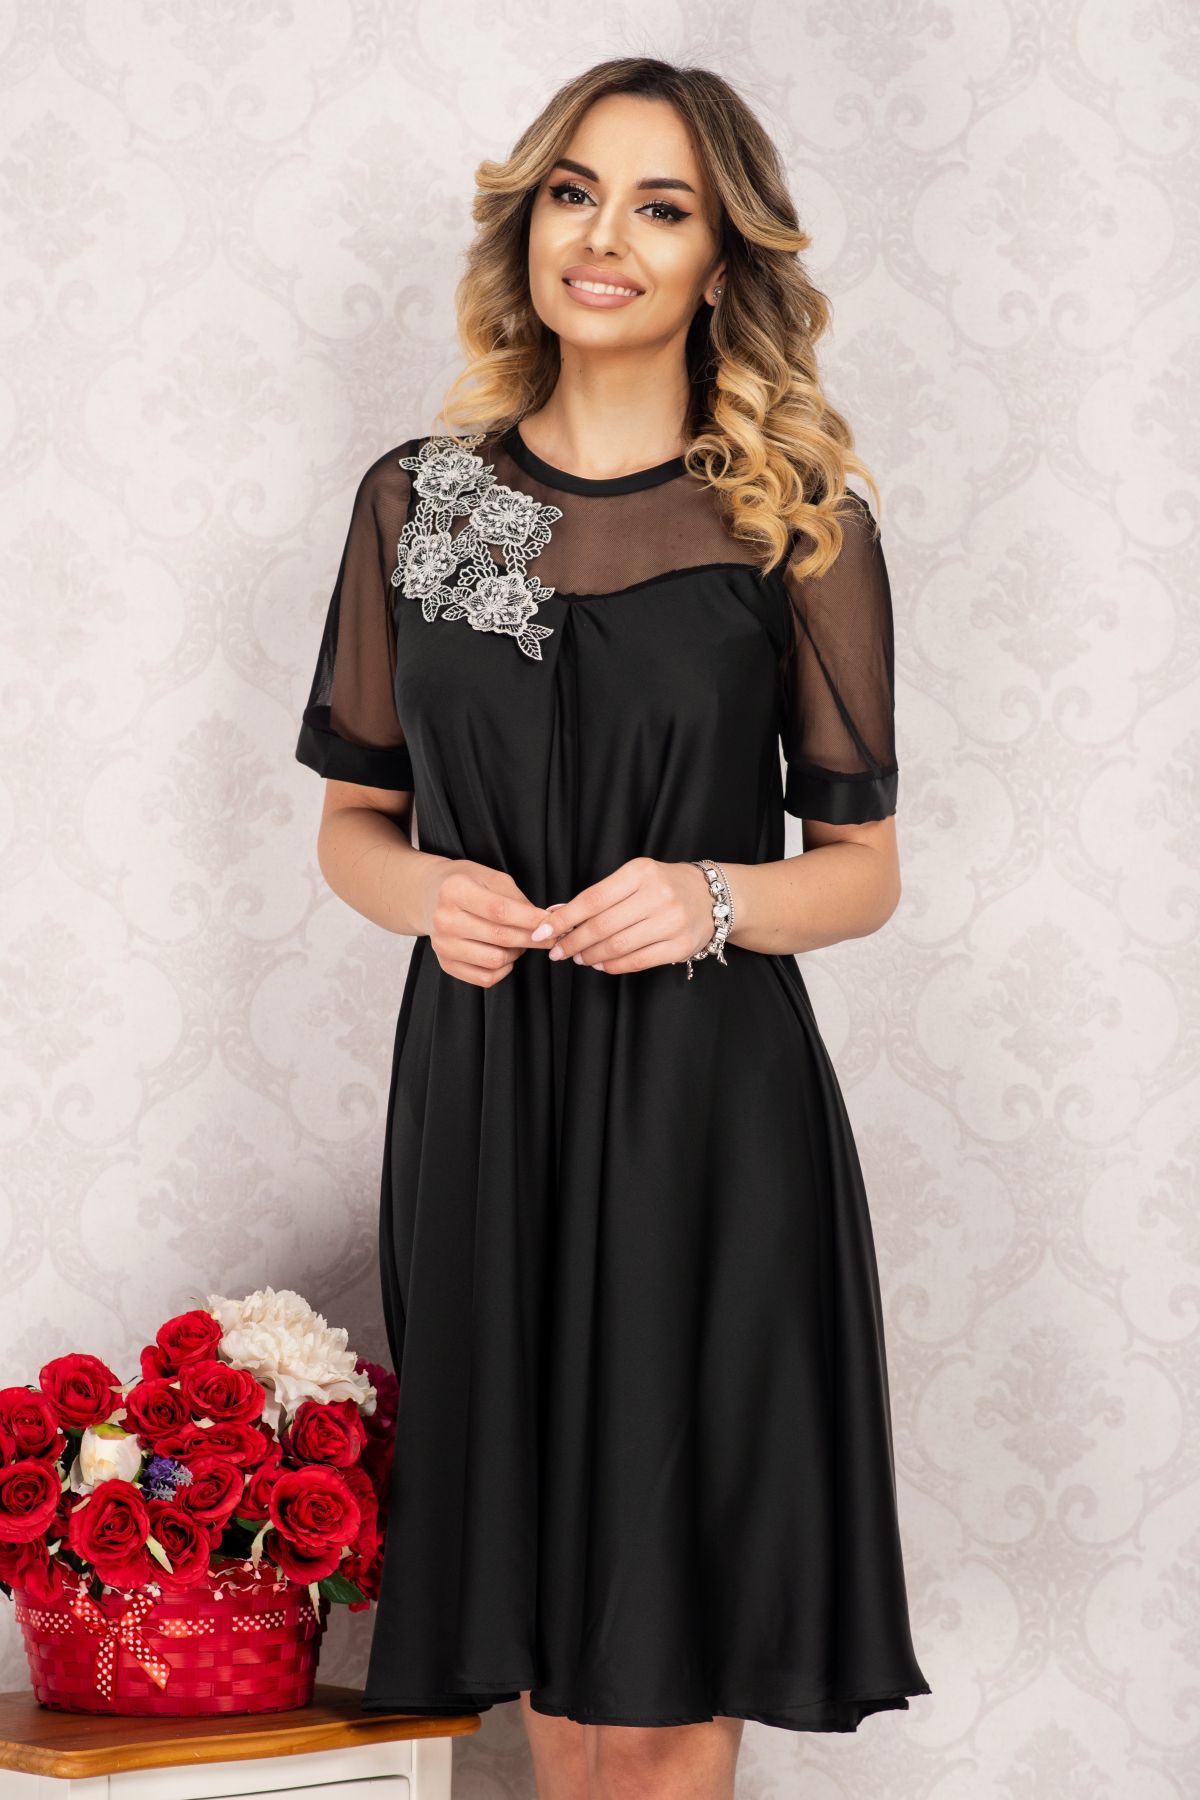 Rochie eleganta lejera Malina neagra cu floare brodata aplicata